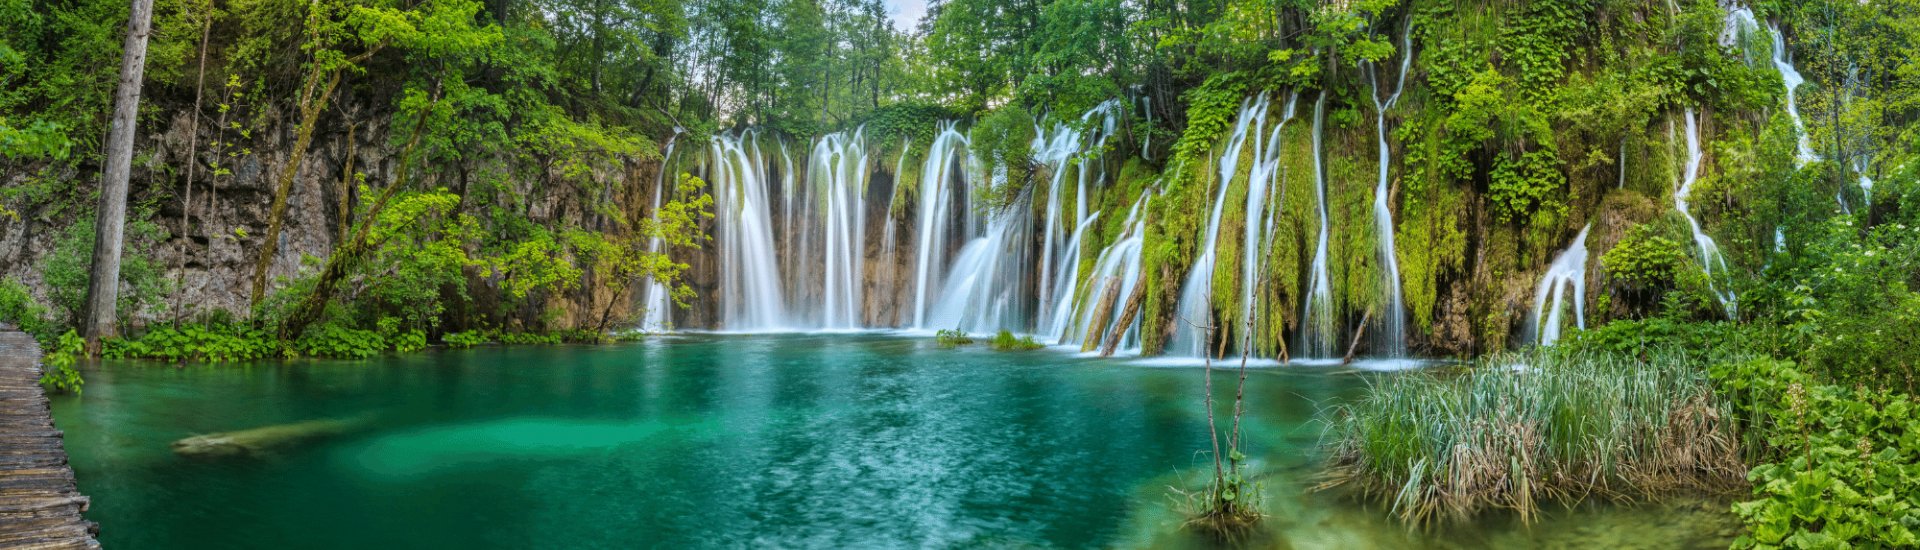 stunning croatian waterfalls and national park view